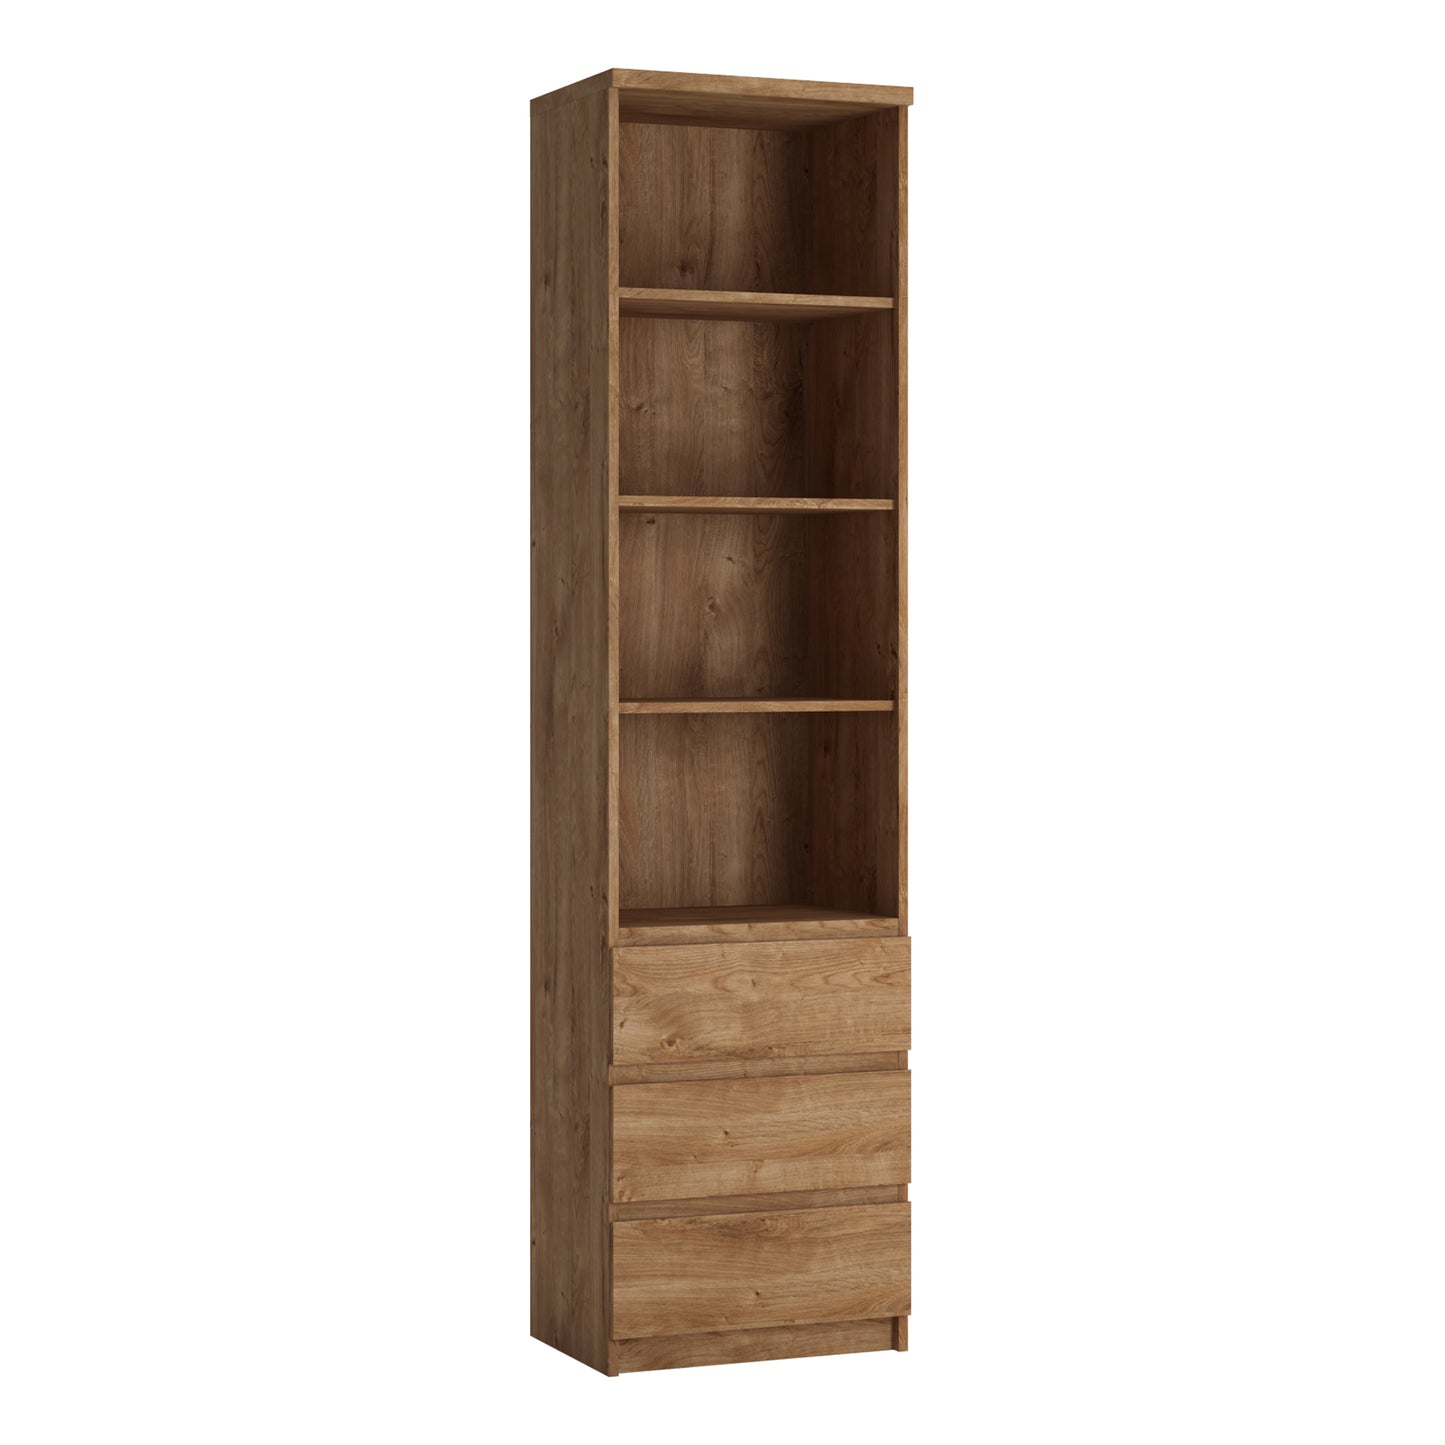 Fribo Oak Fribo Tall narrow 3 drawer bookcase in Oak